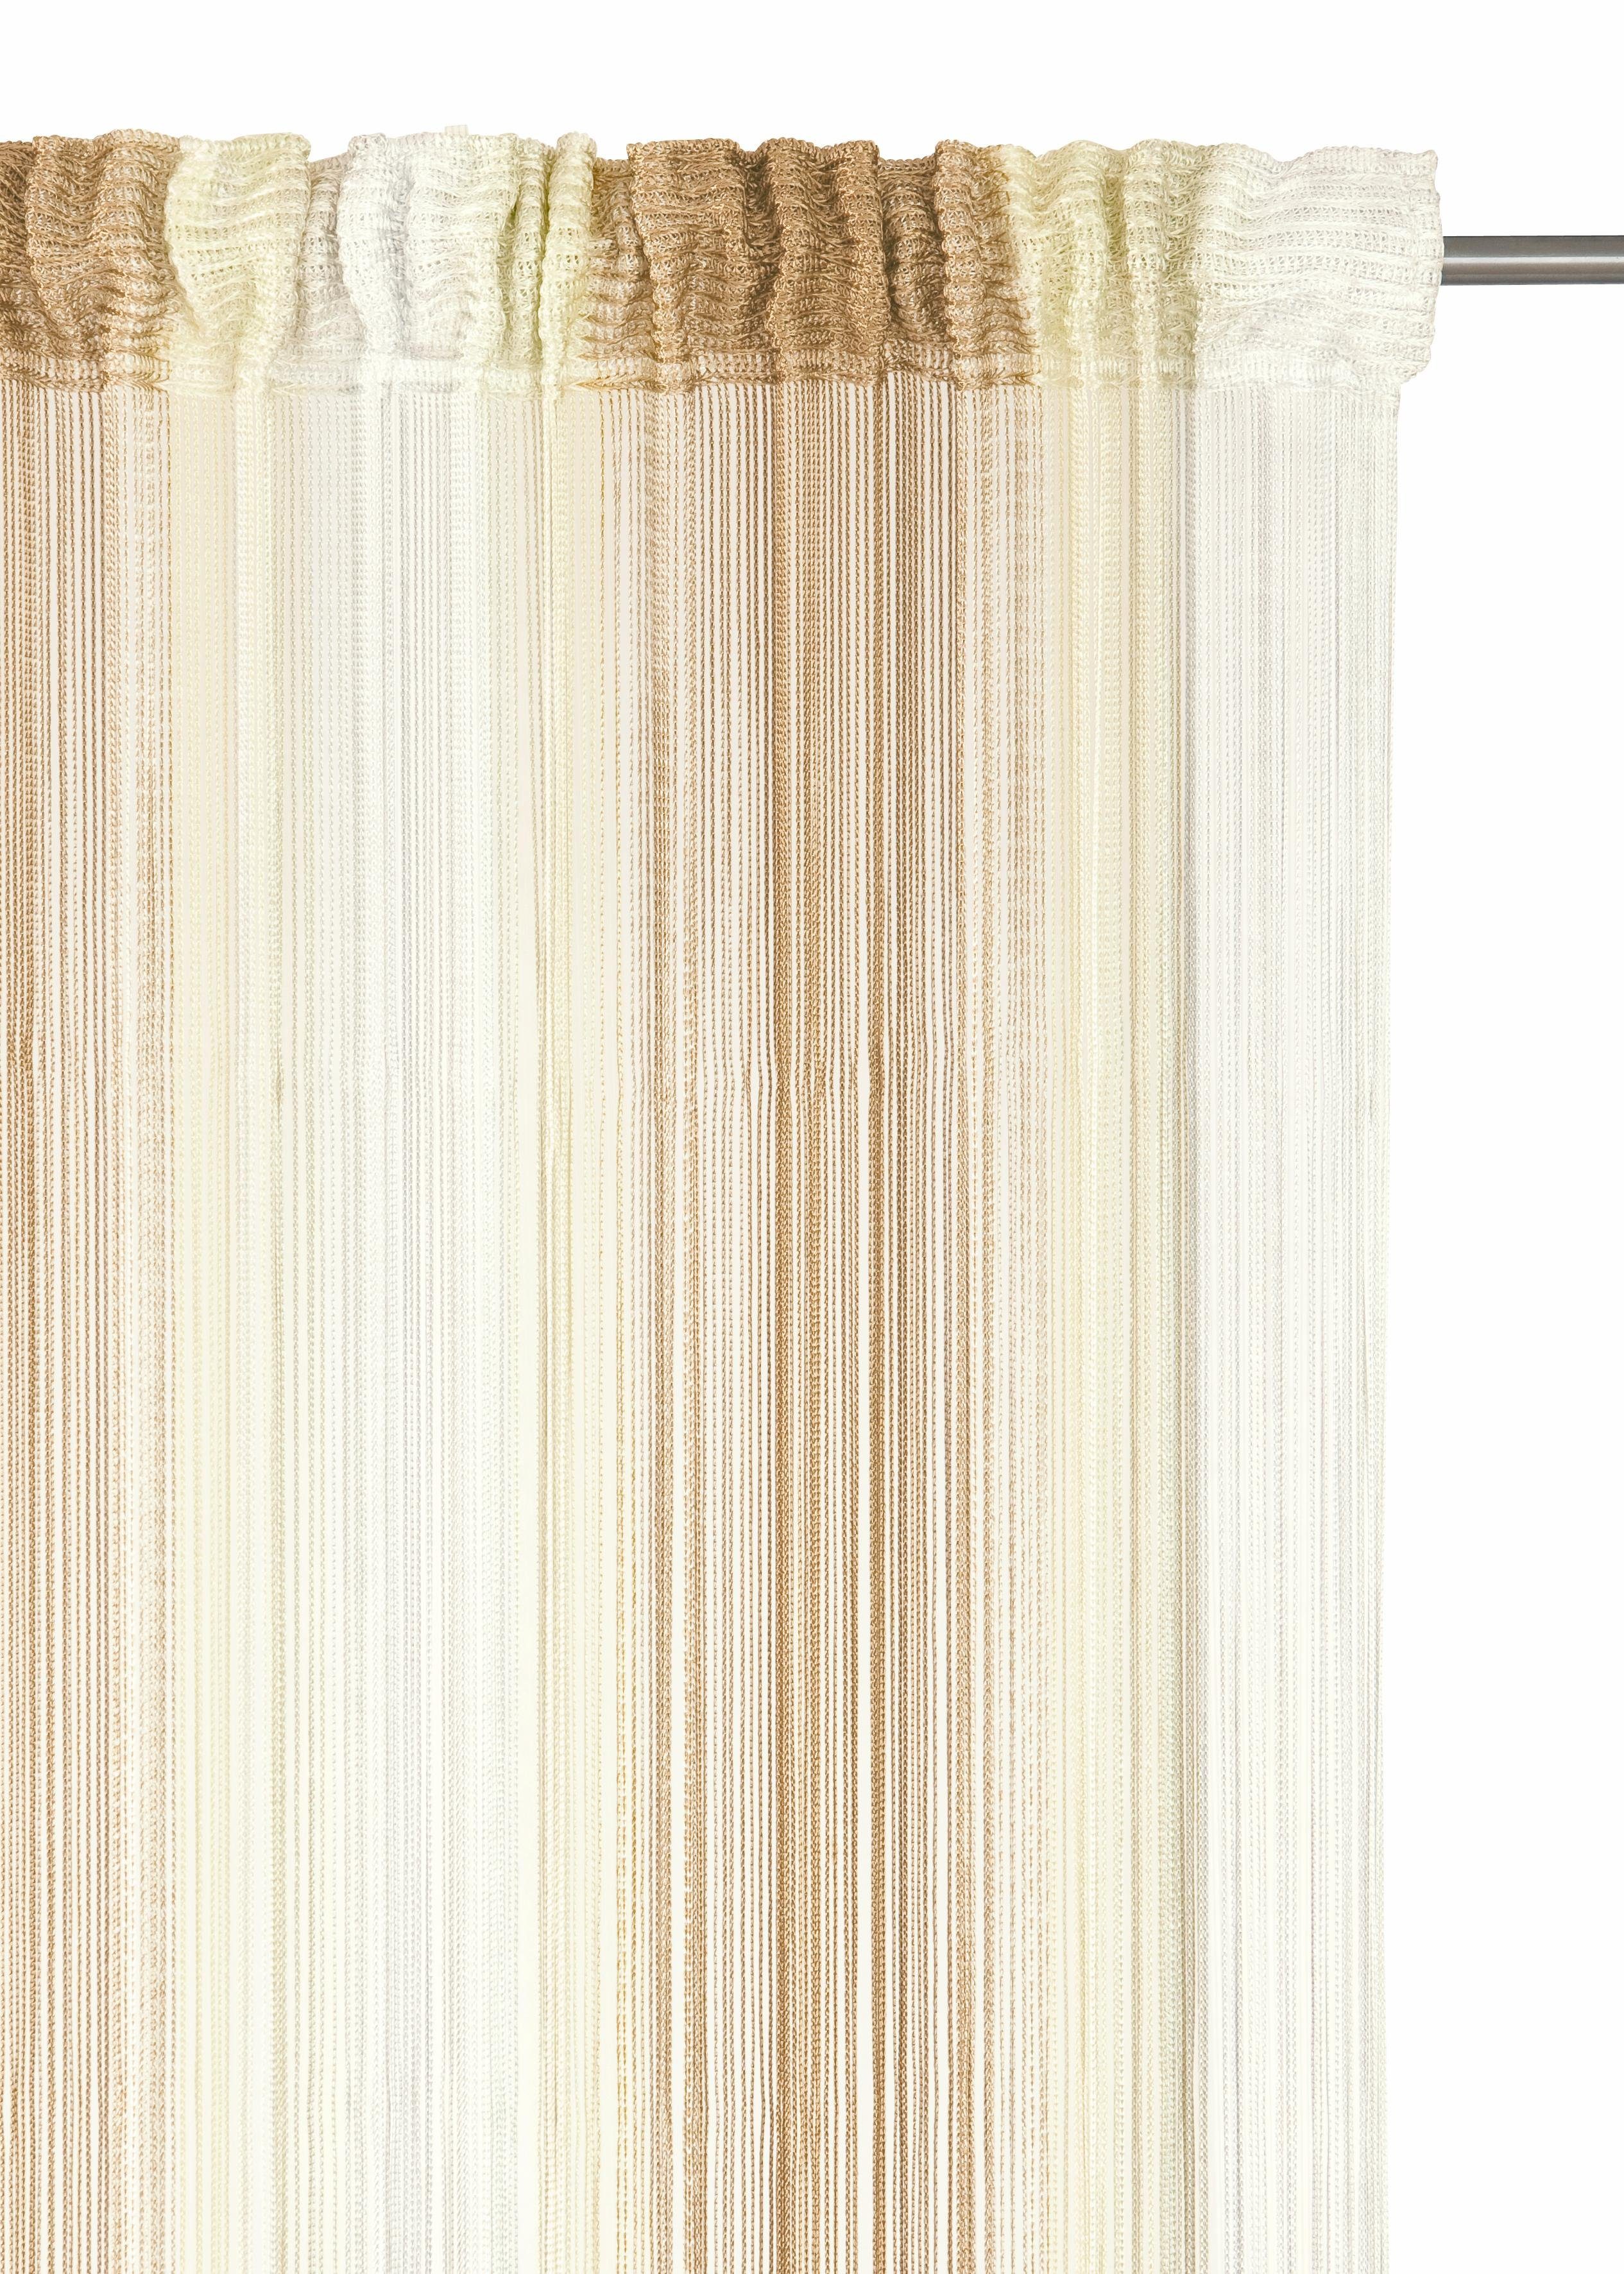 kürzbar Gardine, Weckbrodt, transparent, Insektenschutz, Fadengardine, halbtransparent, St), champagner/karamell Fadenvorhang Multifunktionsband (1 Rebecca,